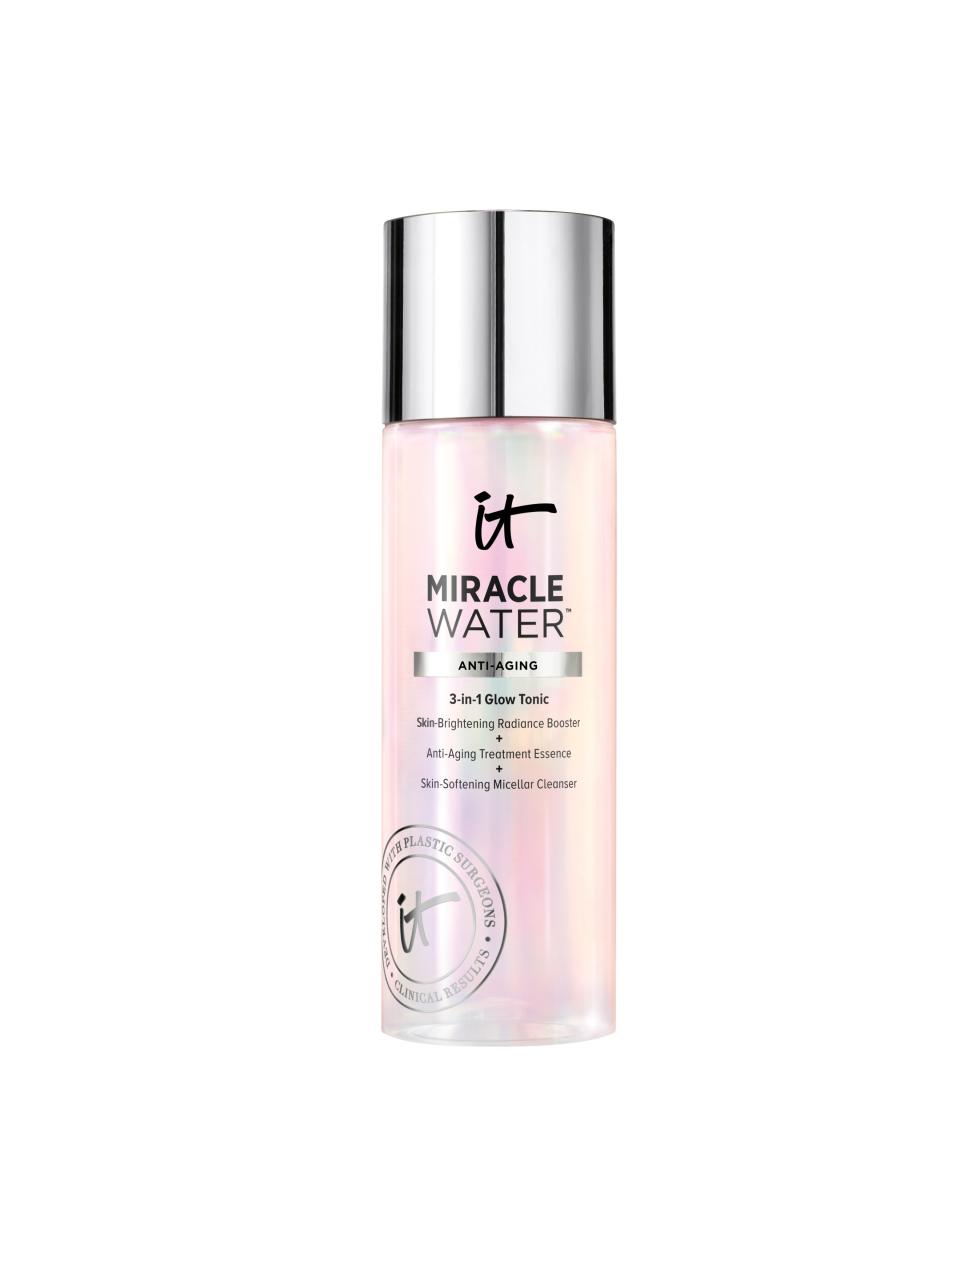 IT Cosmetics Miracle Water™ 3-in-1 Glow Tonic, $38